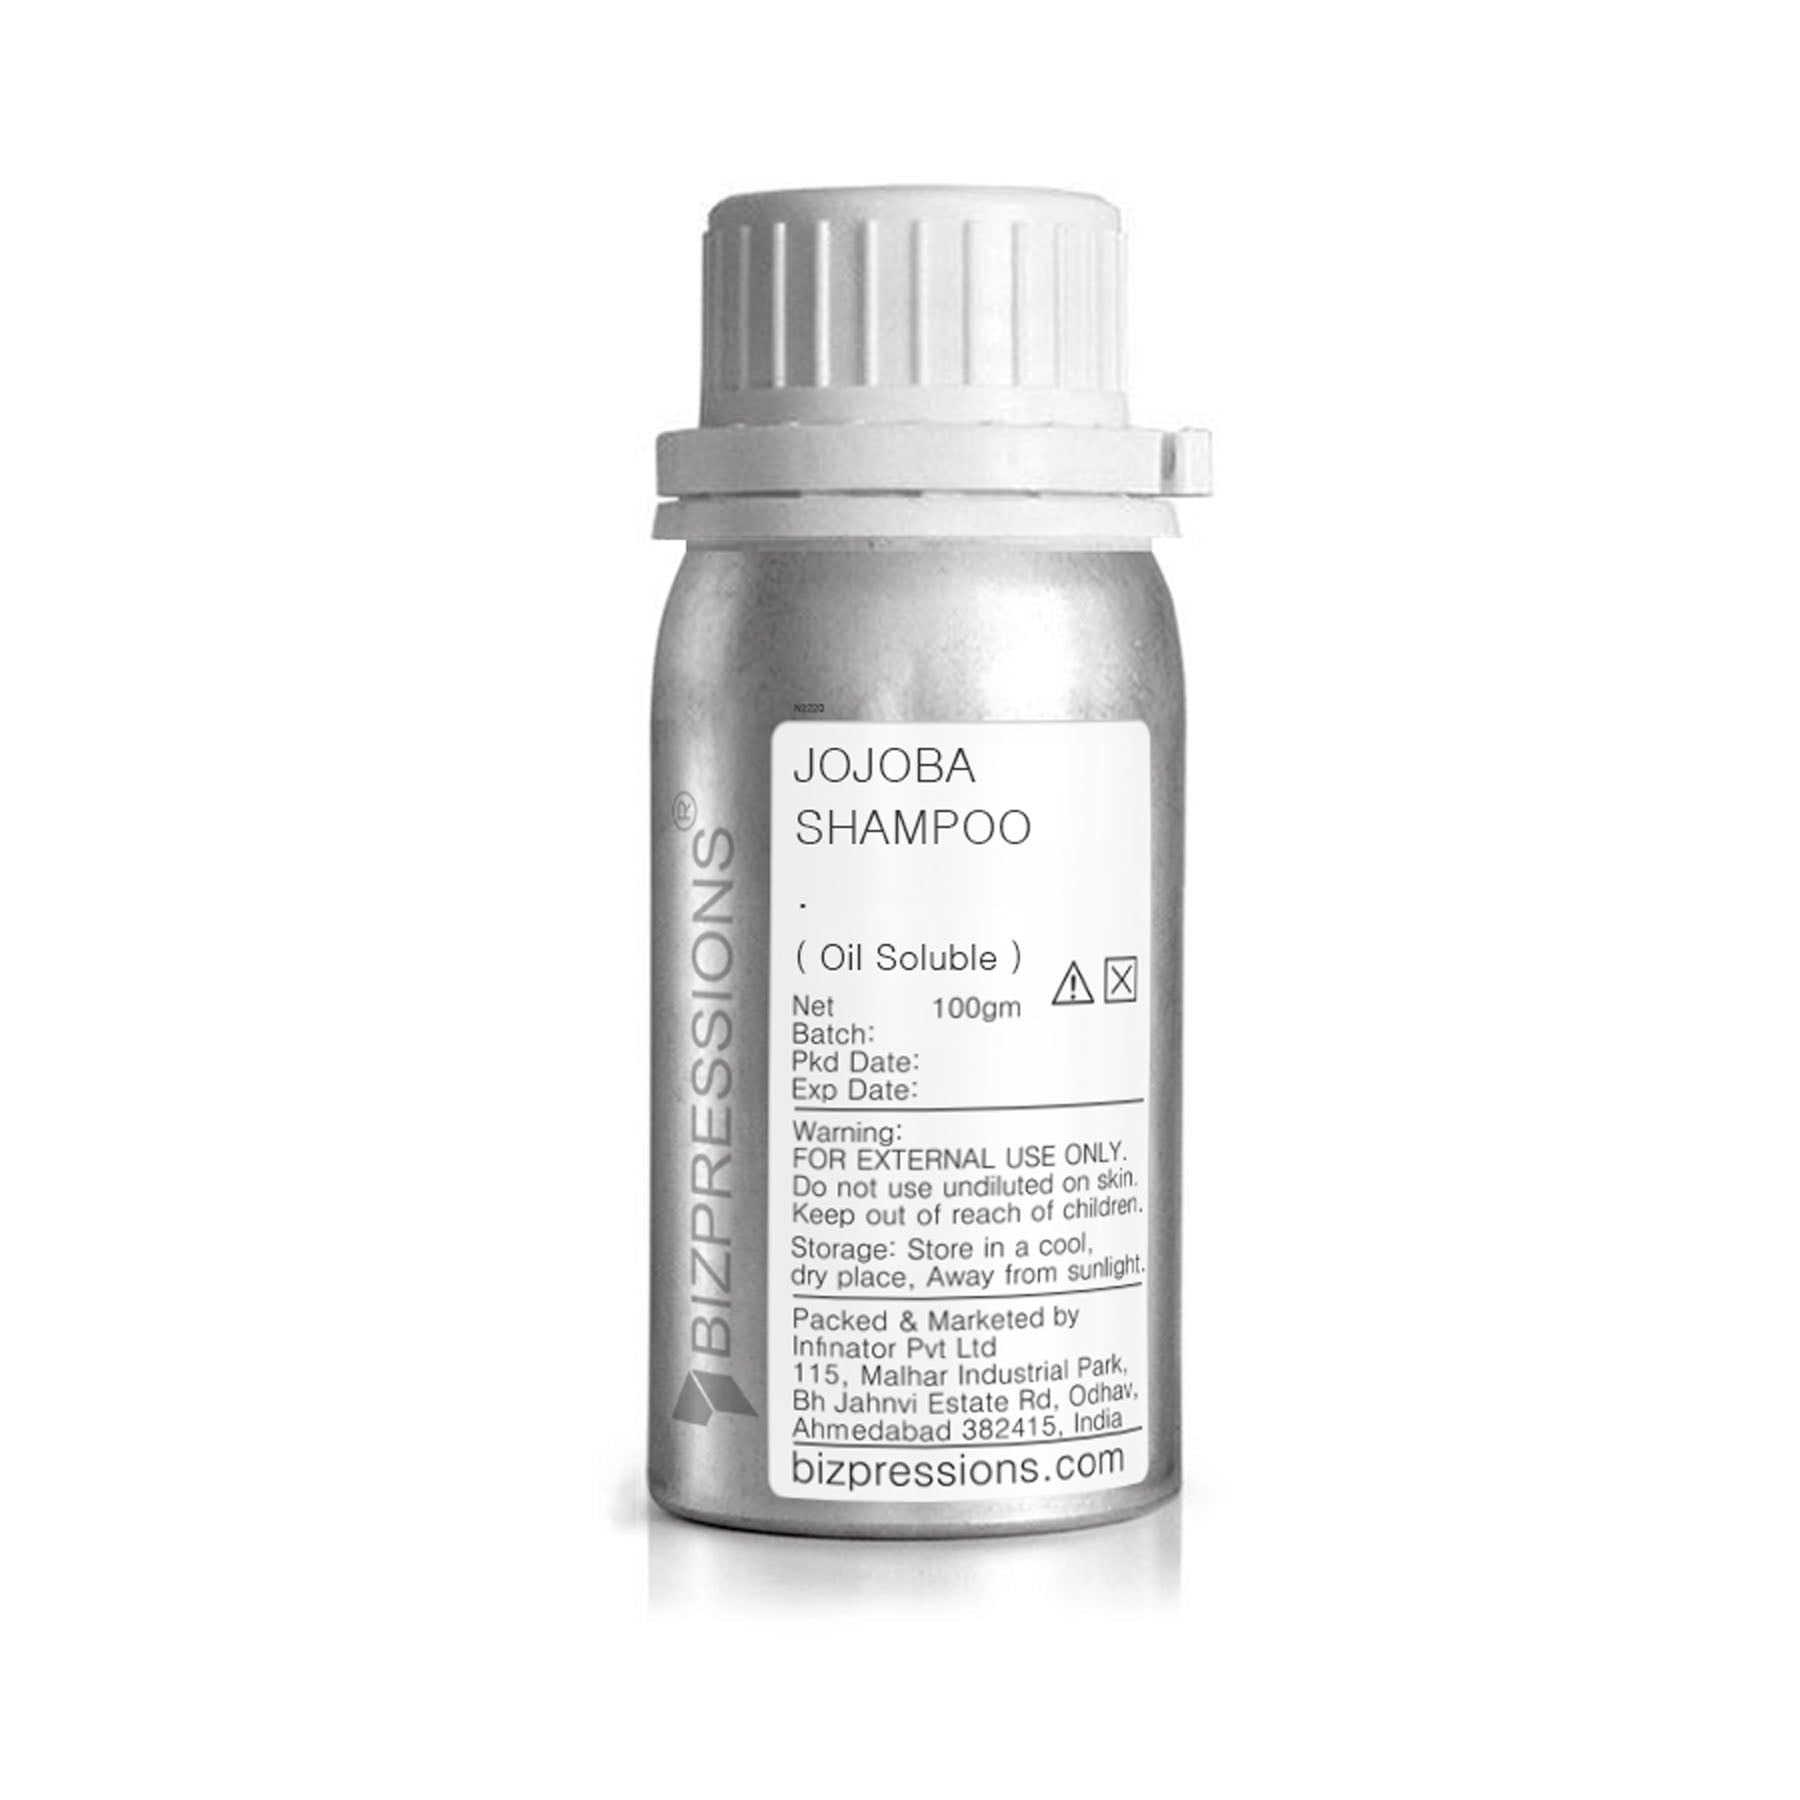 JOJOBA SHAMPOO - Fragrance ( Oil Soluble ) - 100 gm